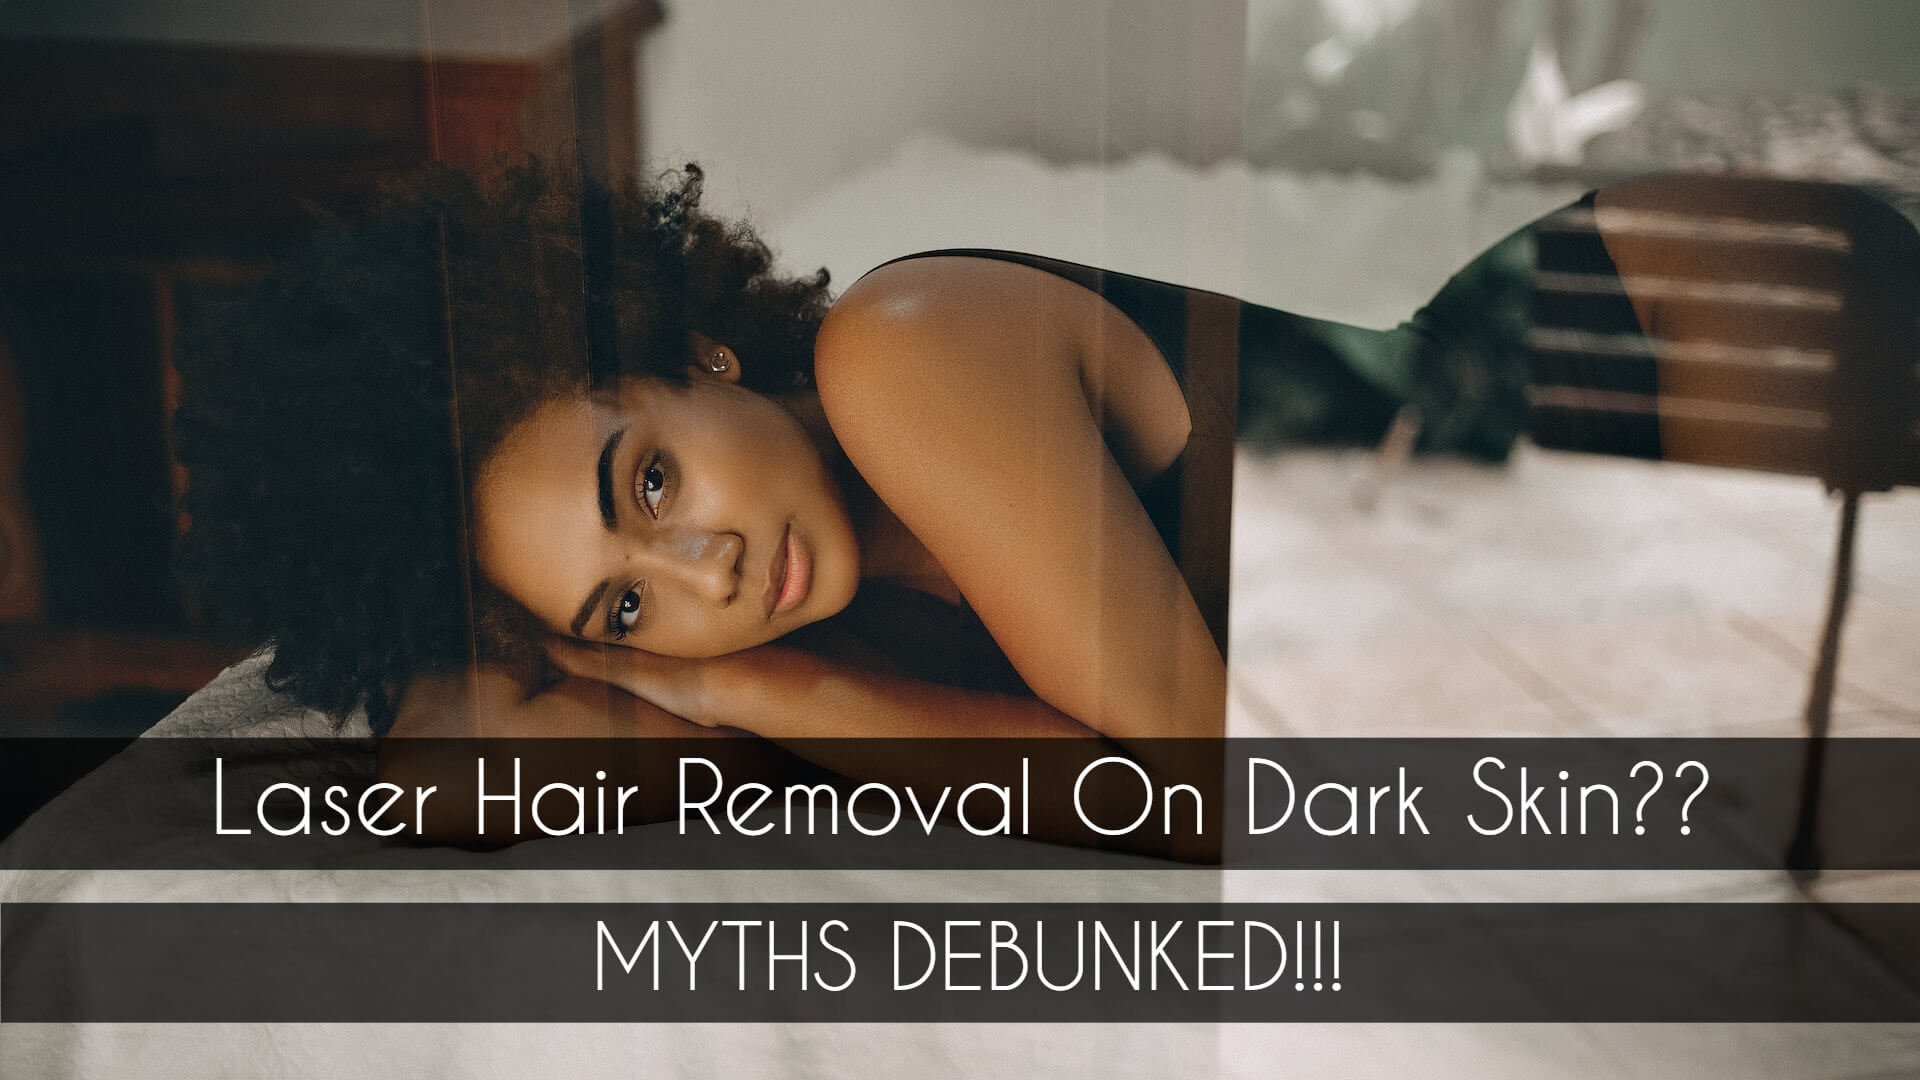 The Laser Hair Removal for Dark Skin: Myths Debunked